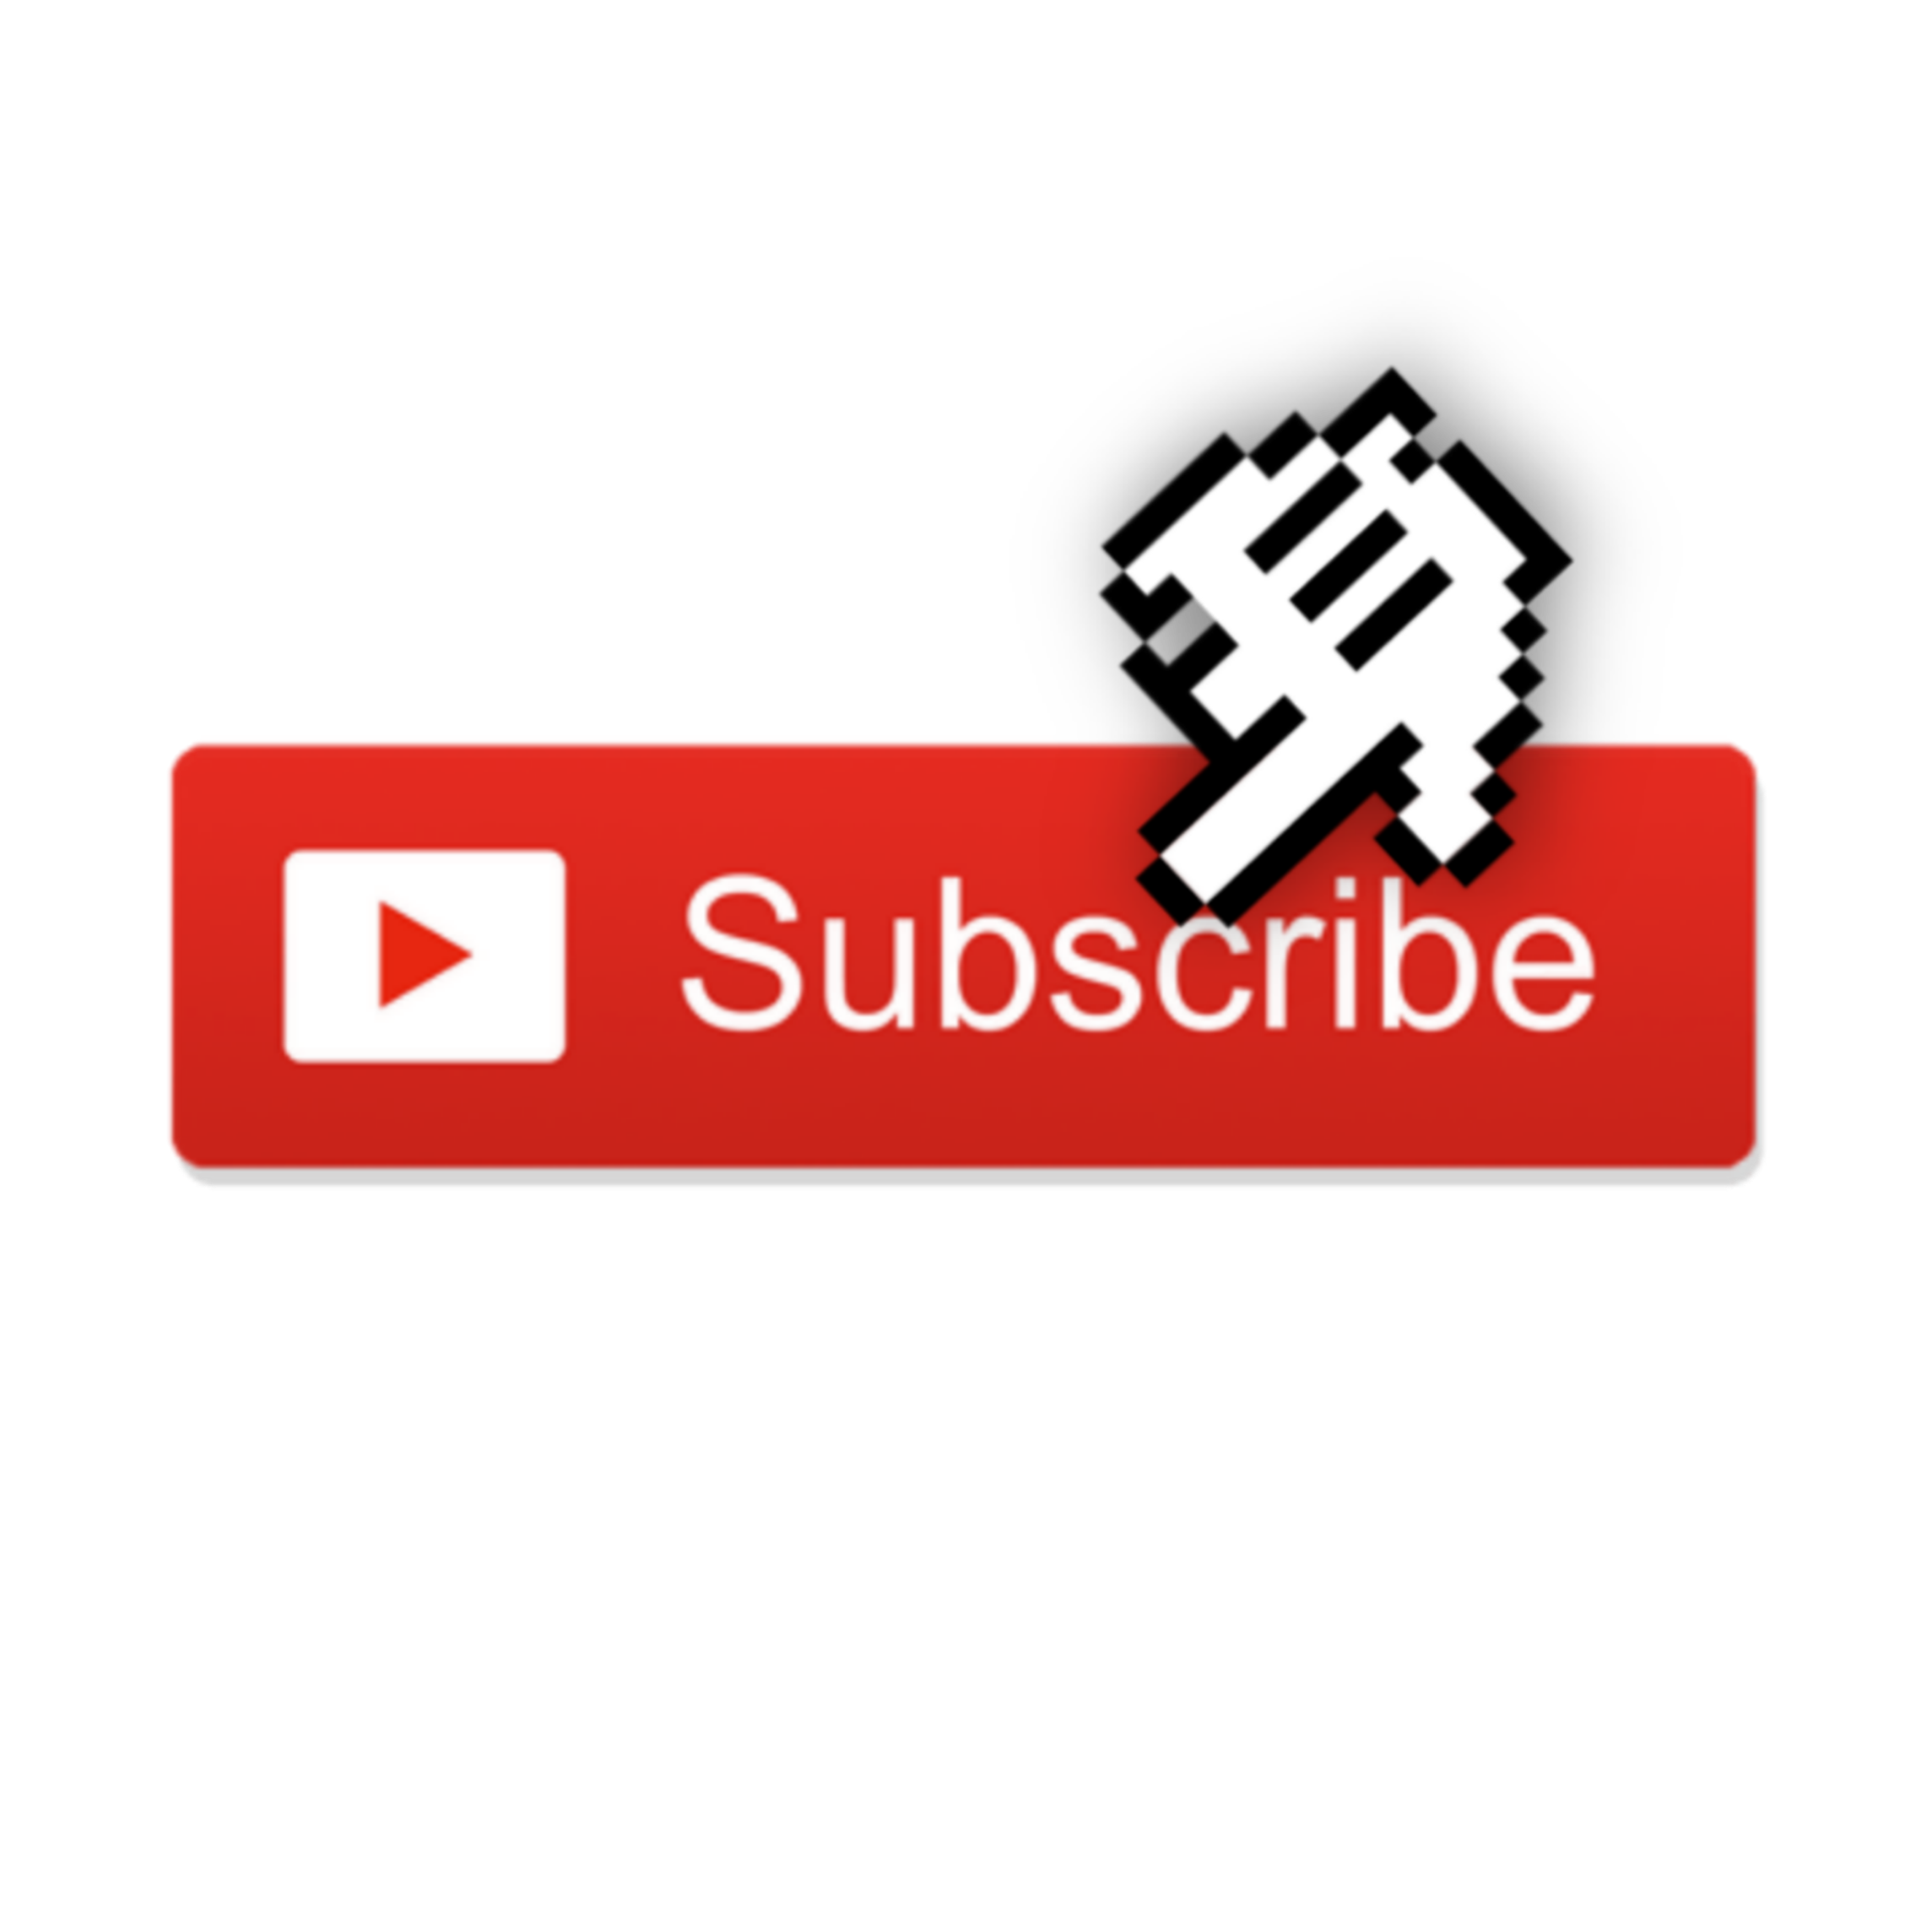 Subscribe. Like share Subscribe. Приват Subscribe. Share like Subsk ribe. Subscribe shares